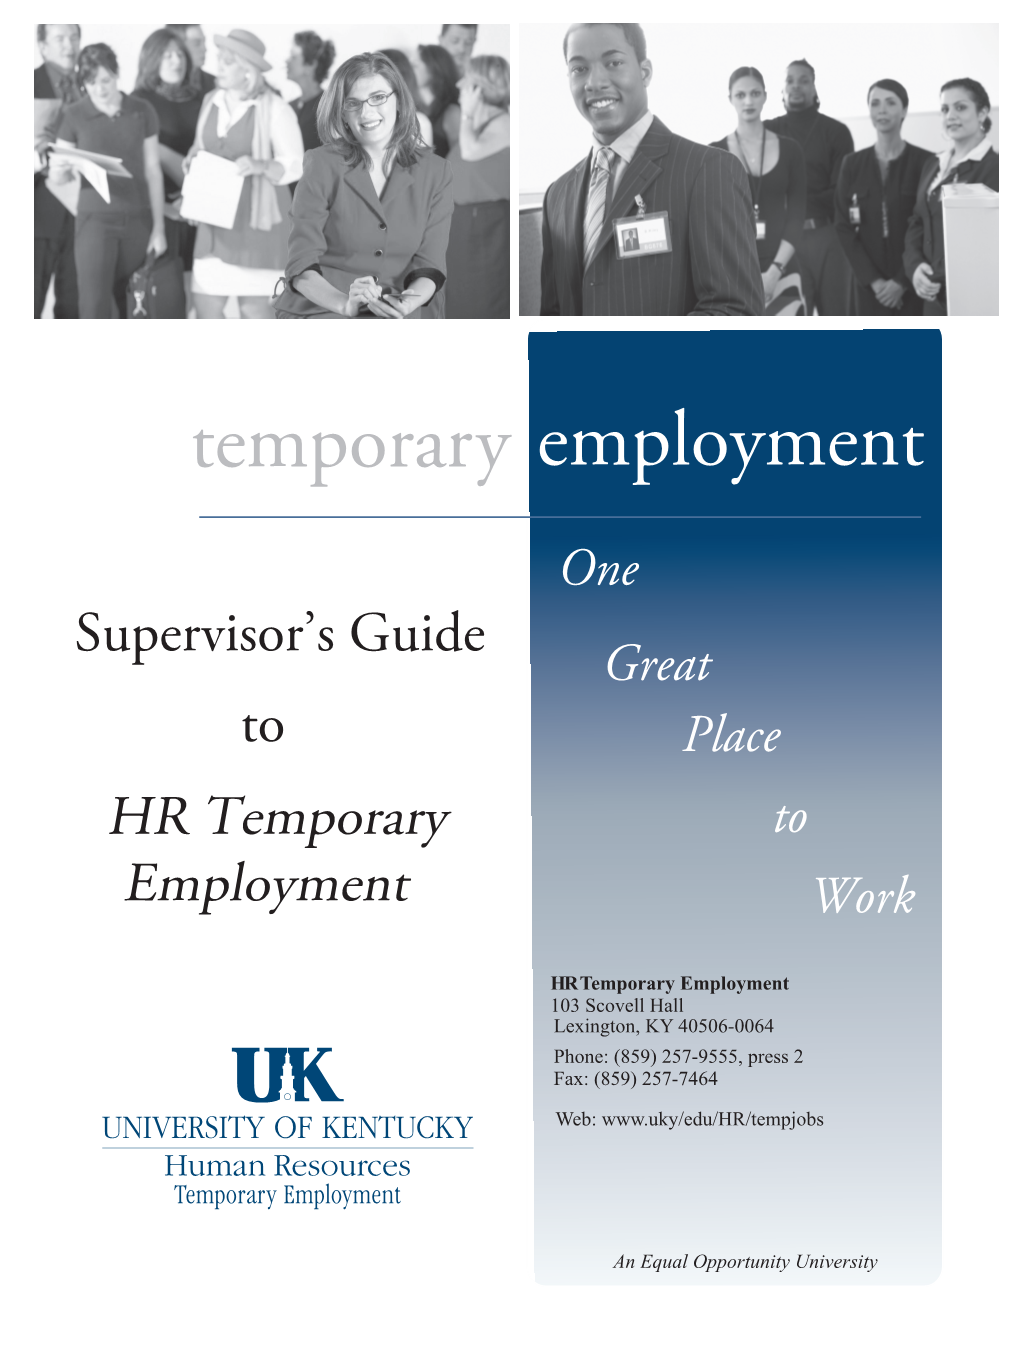 Temporary Employment